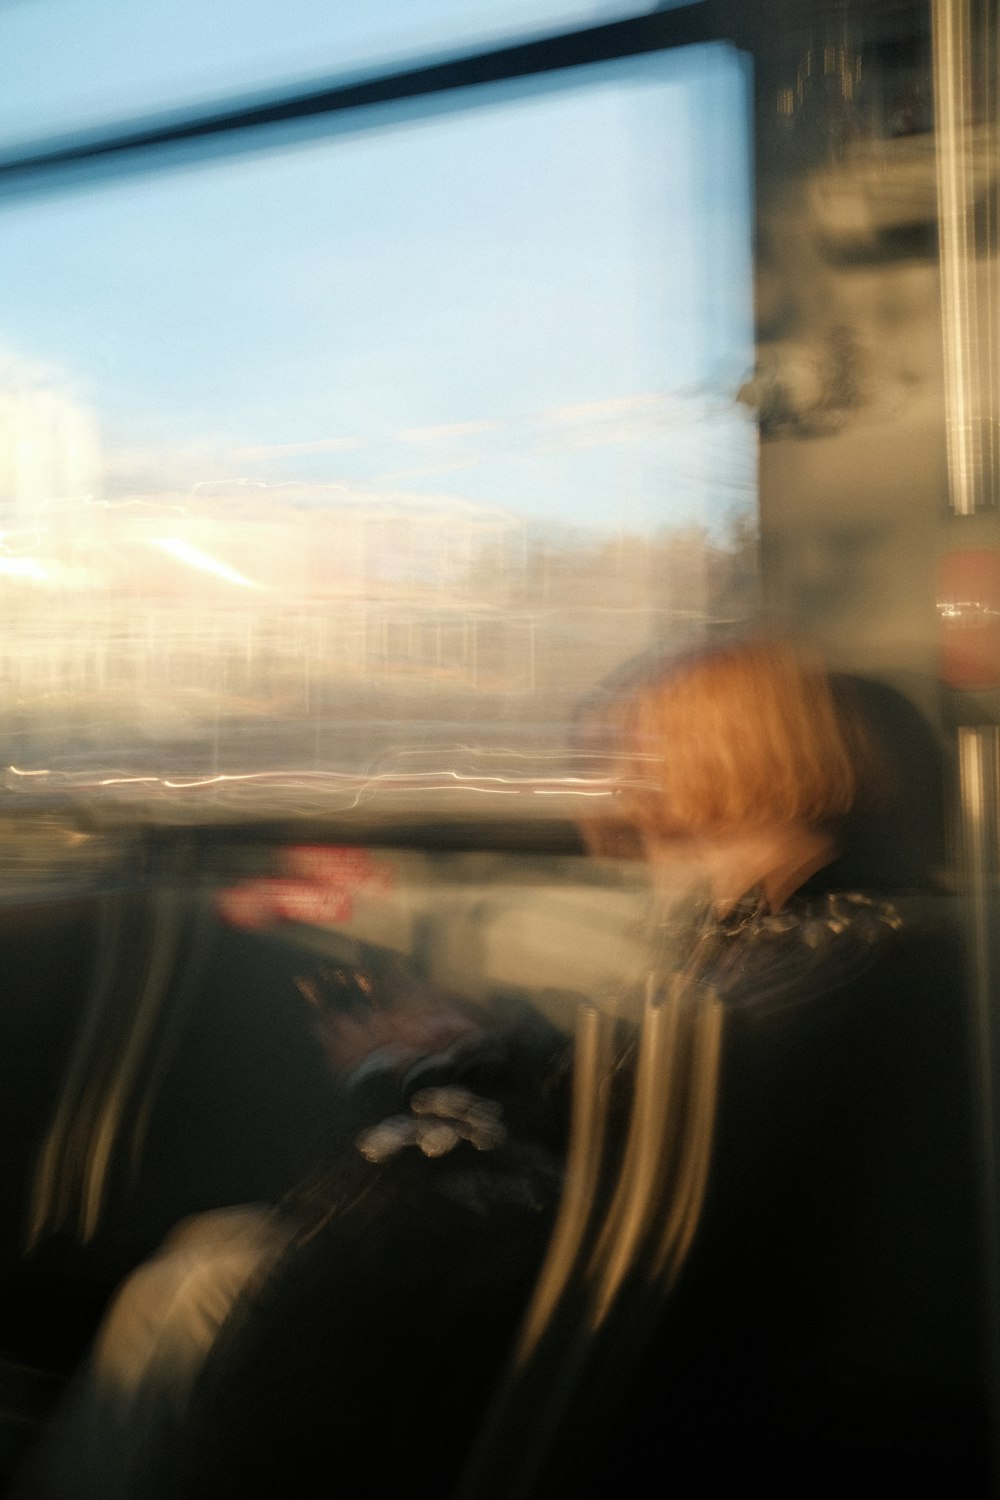 Una foto sfocata di una persona seduta su un autobus